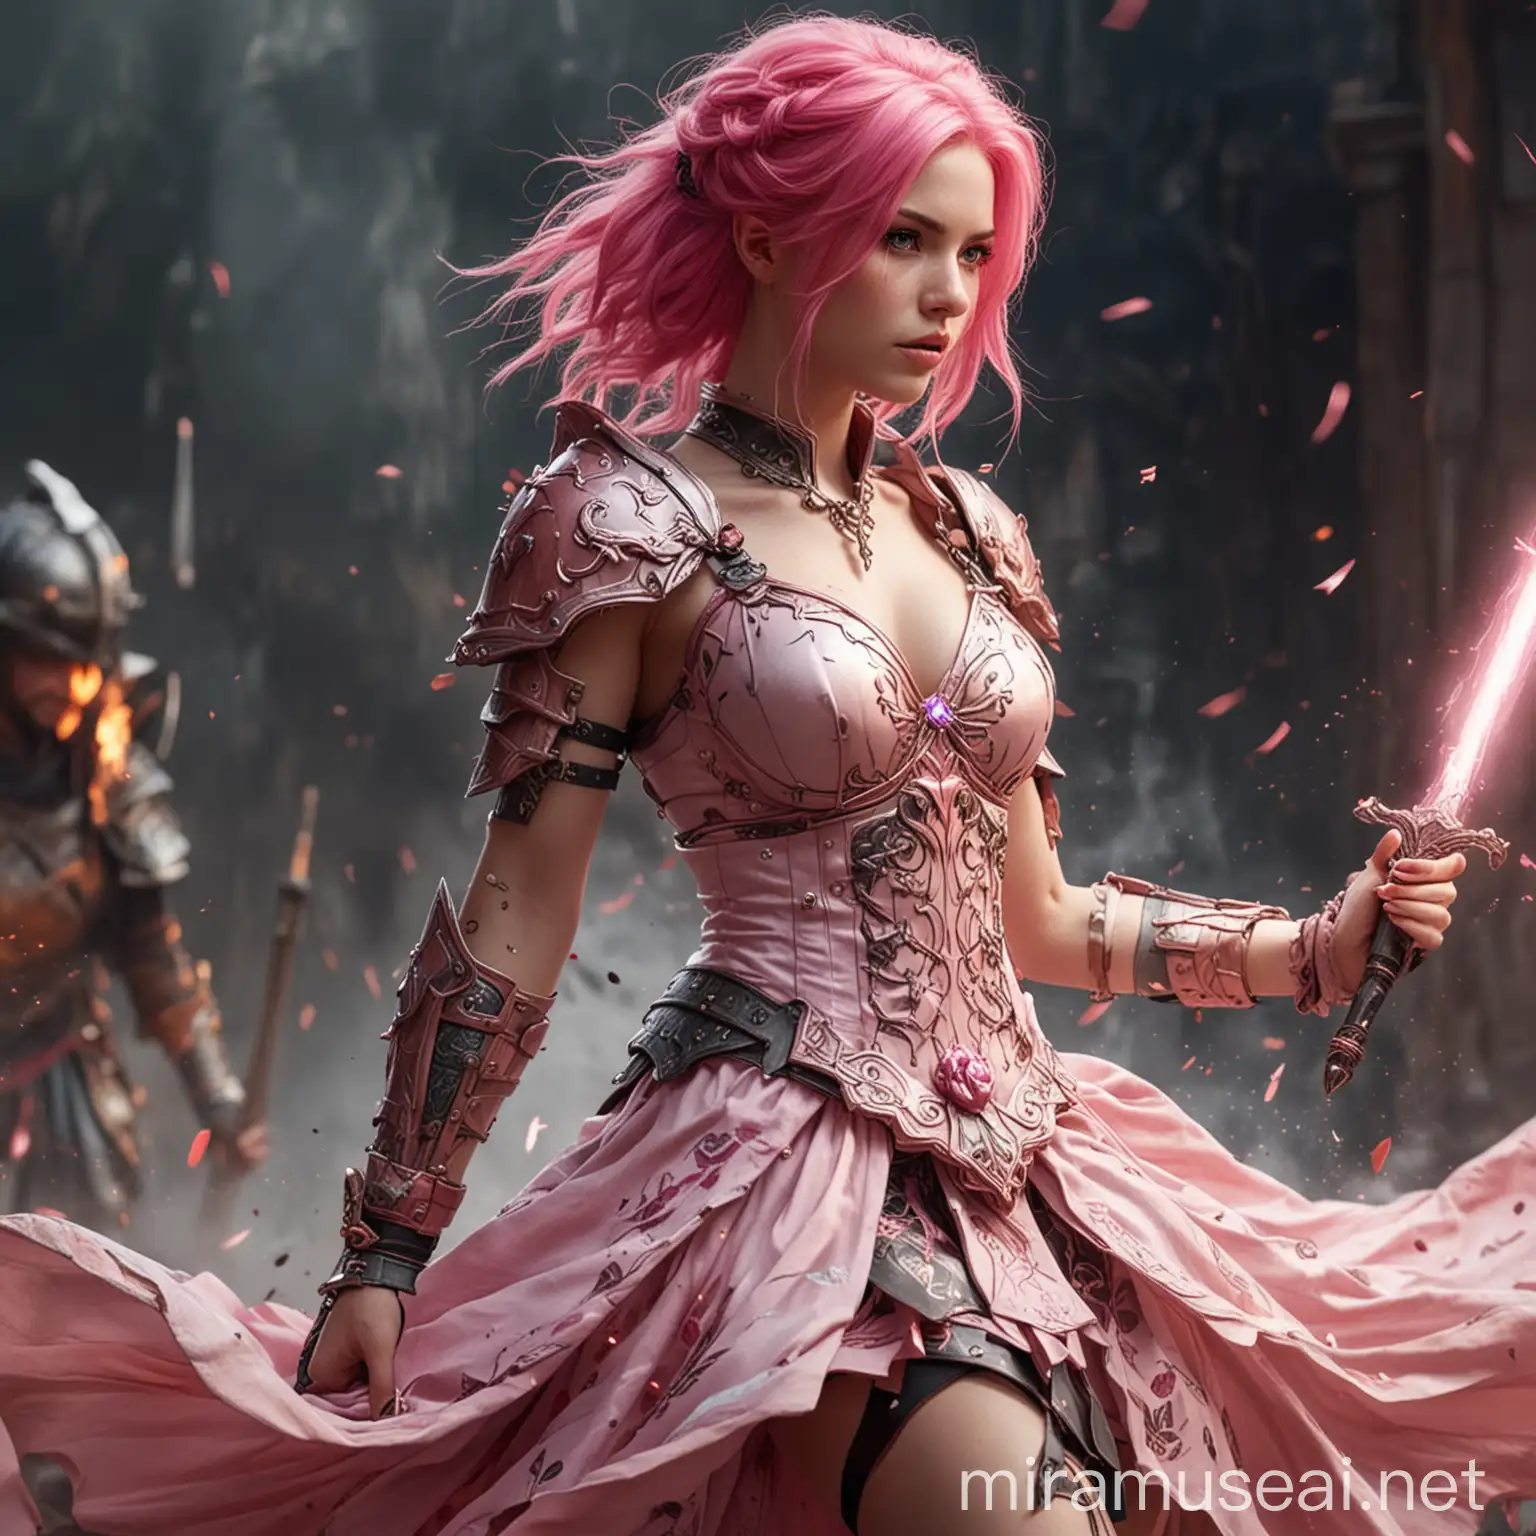 PinkHaired Female Warrior in Elegant Battle Dress Confronts Foe